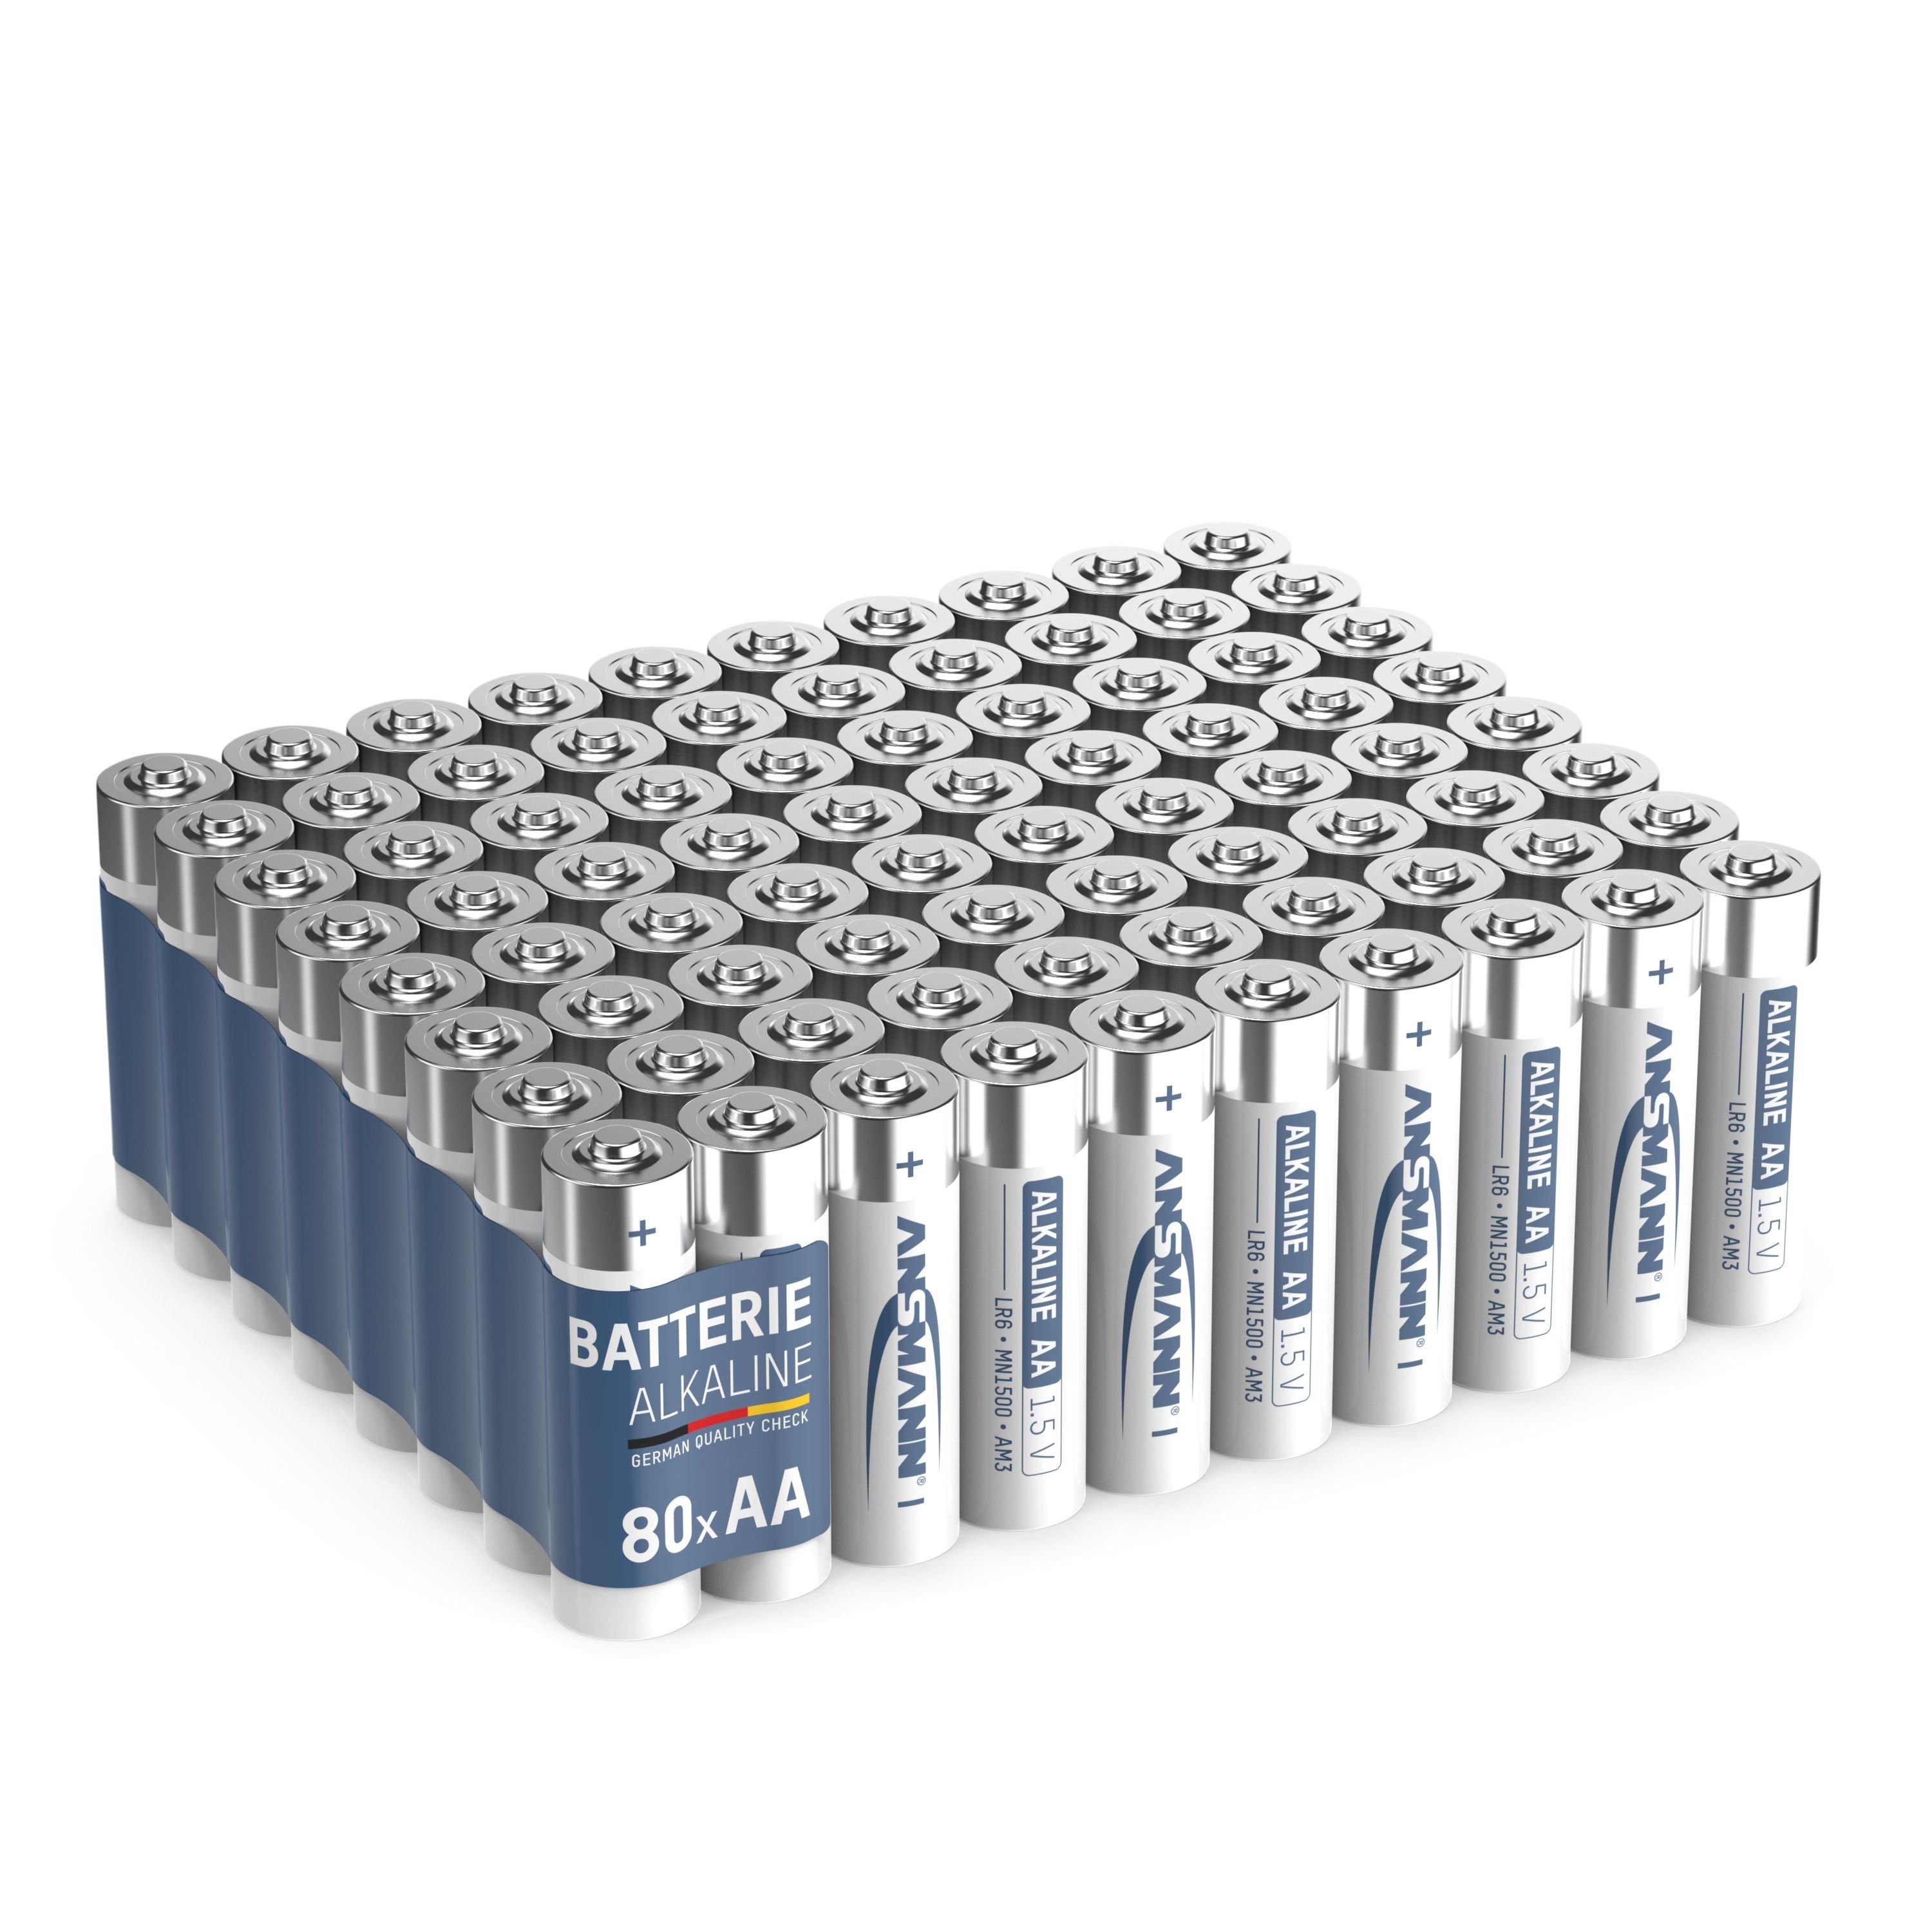 ANSMANN® Batterien AA 80 Stück, Alkaline Mignon Batterie, für Lichterkette uvm. Batterie